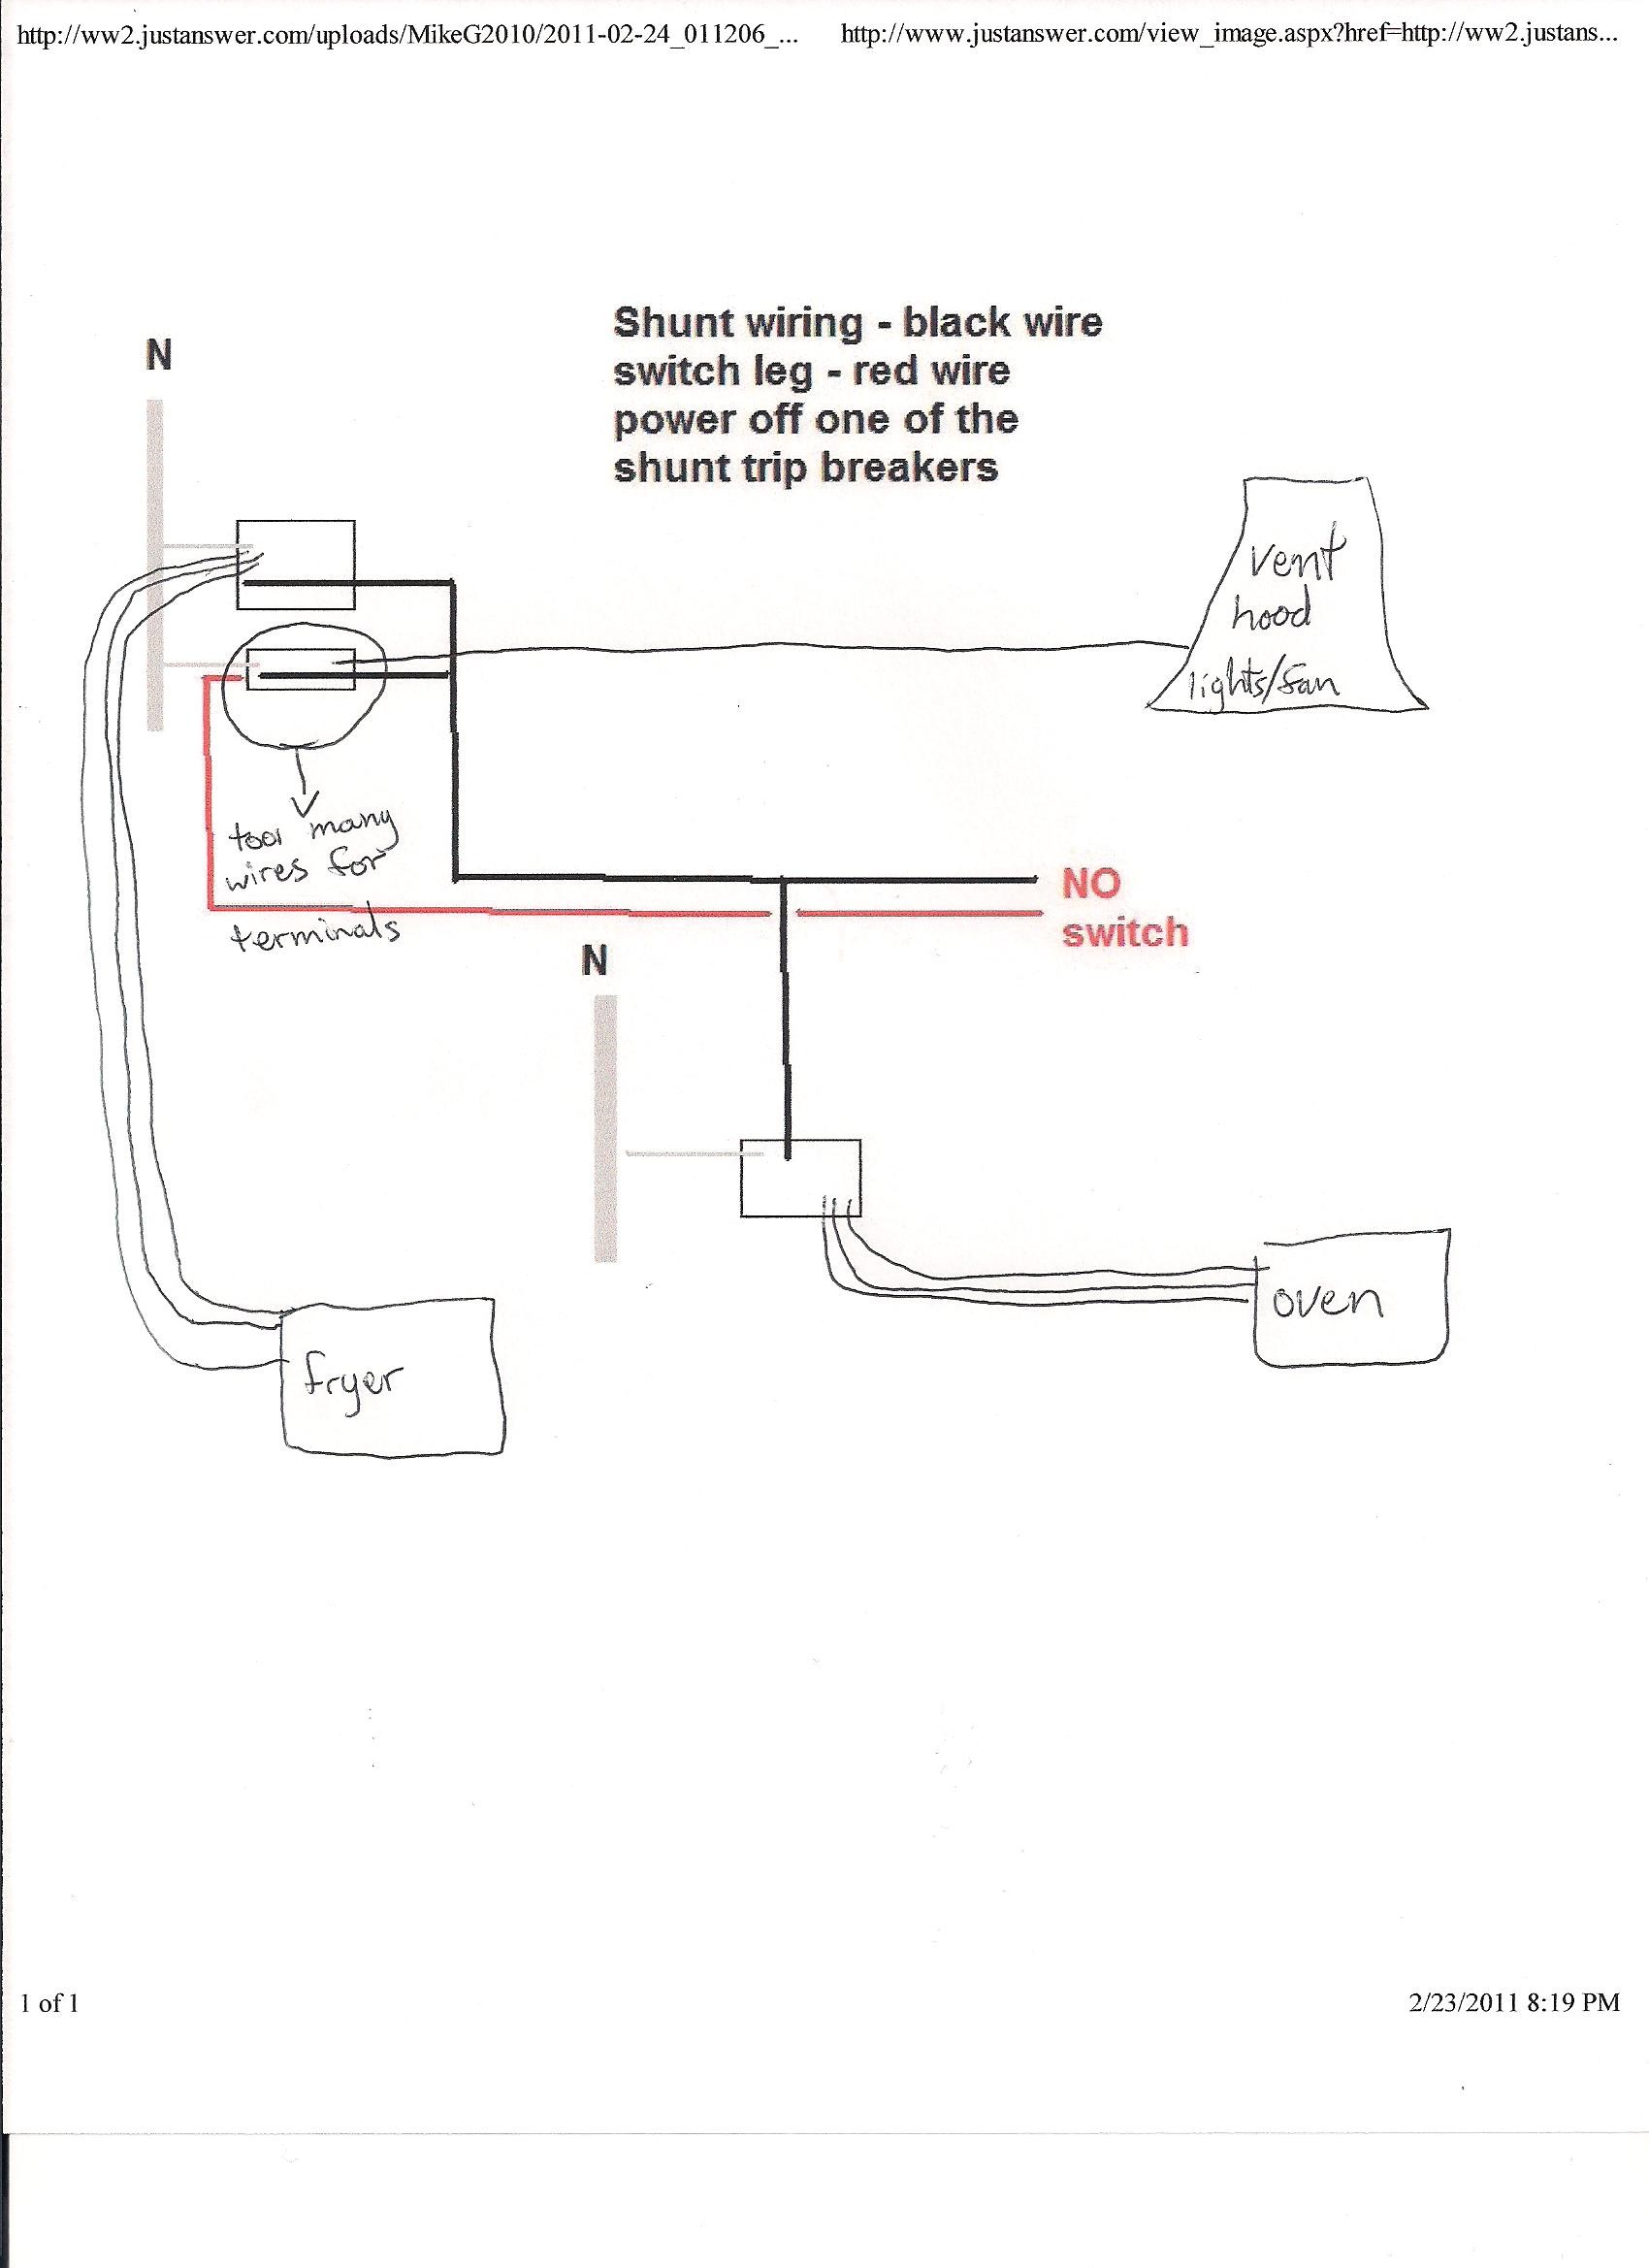 Shunt Trip Circuit Breaker Wiring Diagram Saleexpert Me In Square Best Ideas D And